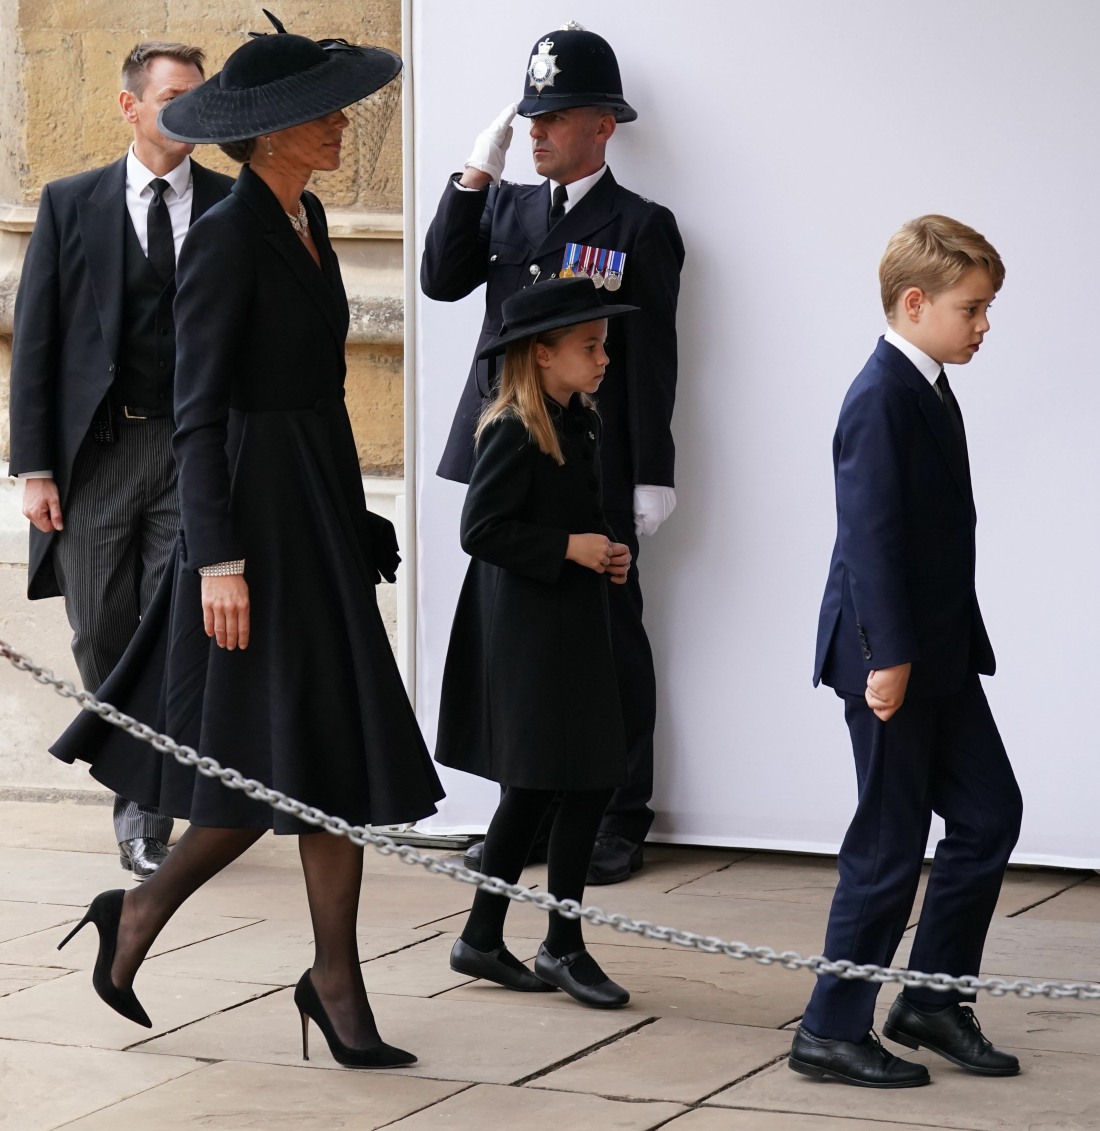 kaltak | Prenses Charlotte ve Prens George muhtemelen cenazeye gitmemeliydi